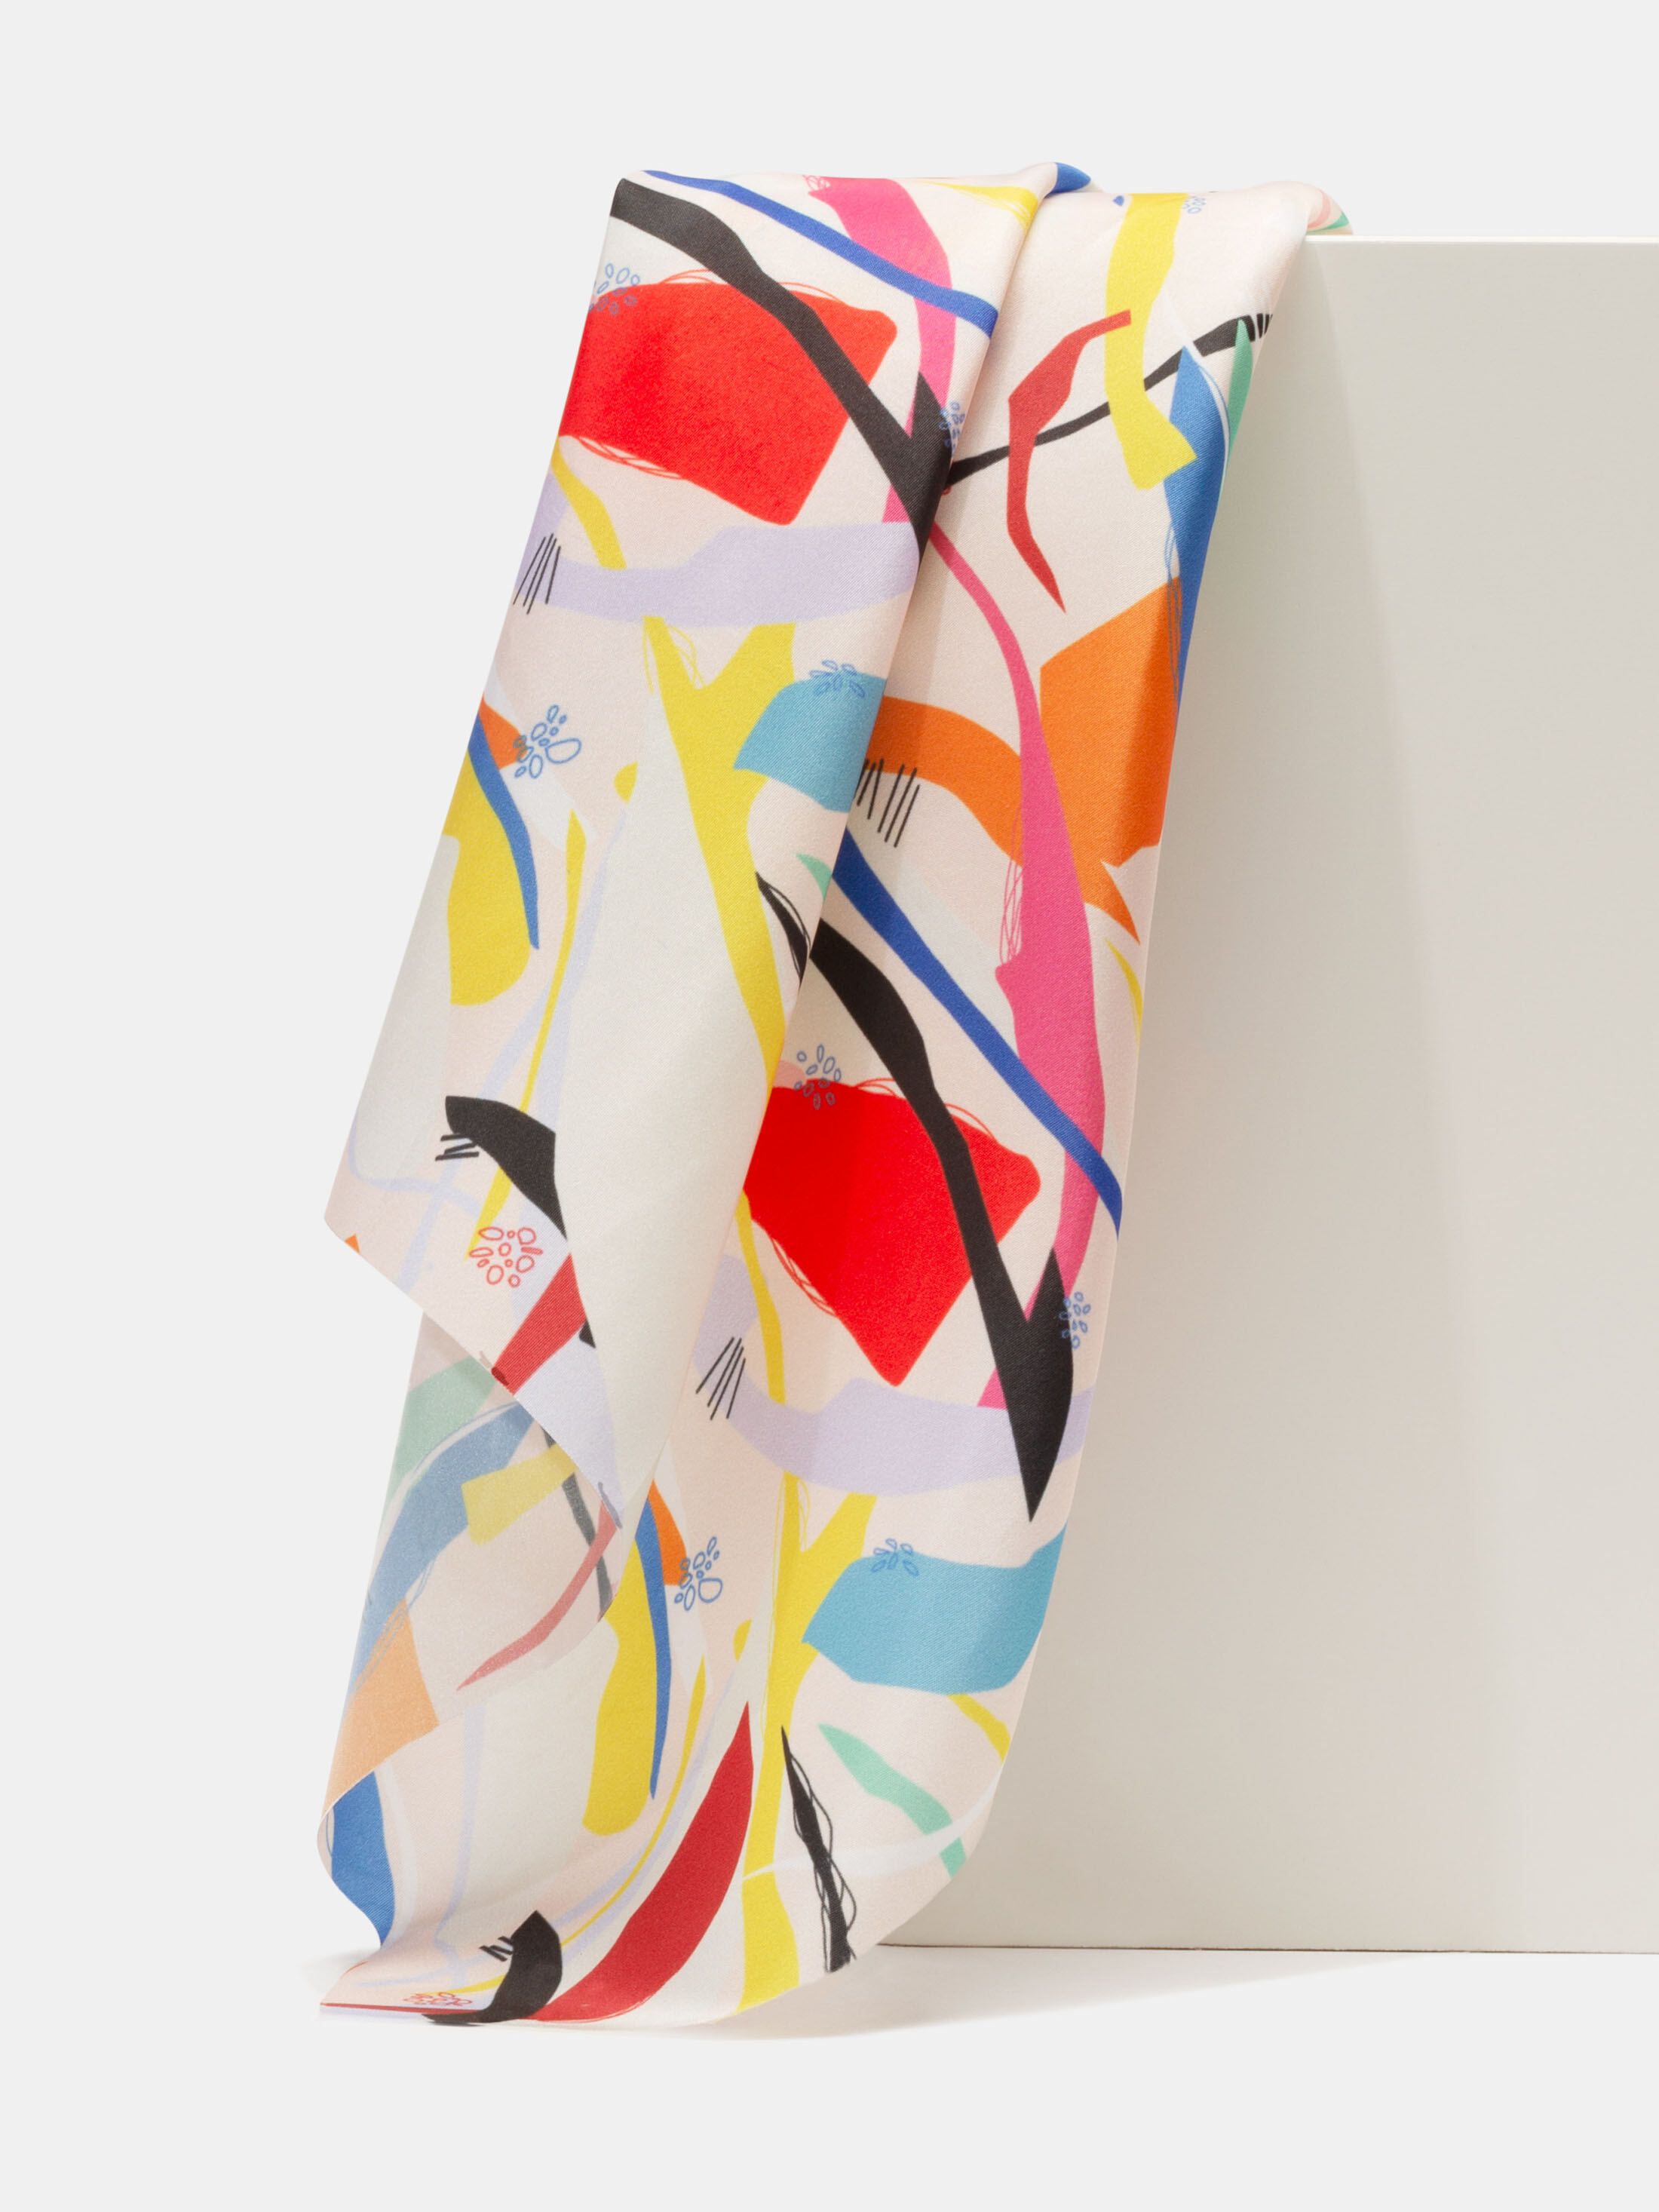 Custom Printed Taffeta Fabric. Explore Customized Textiles